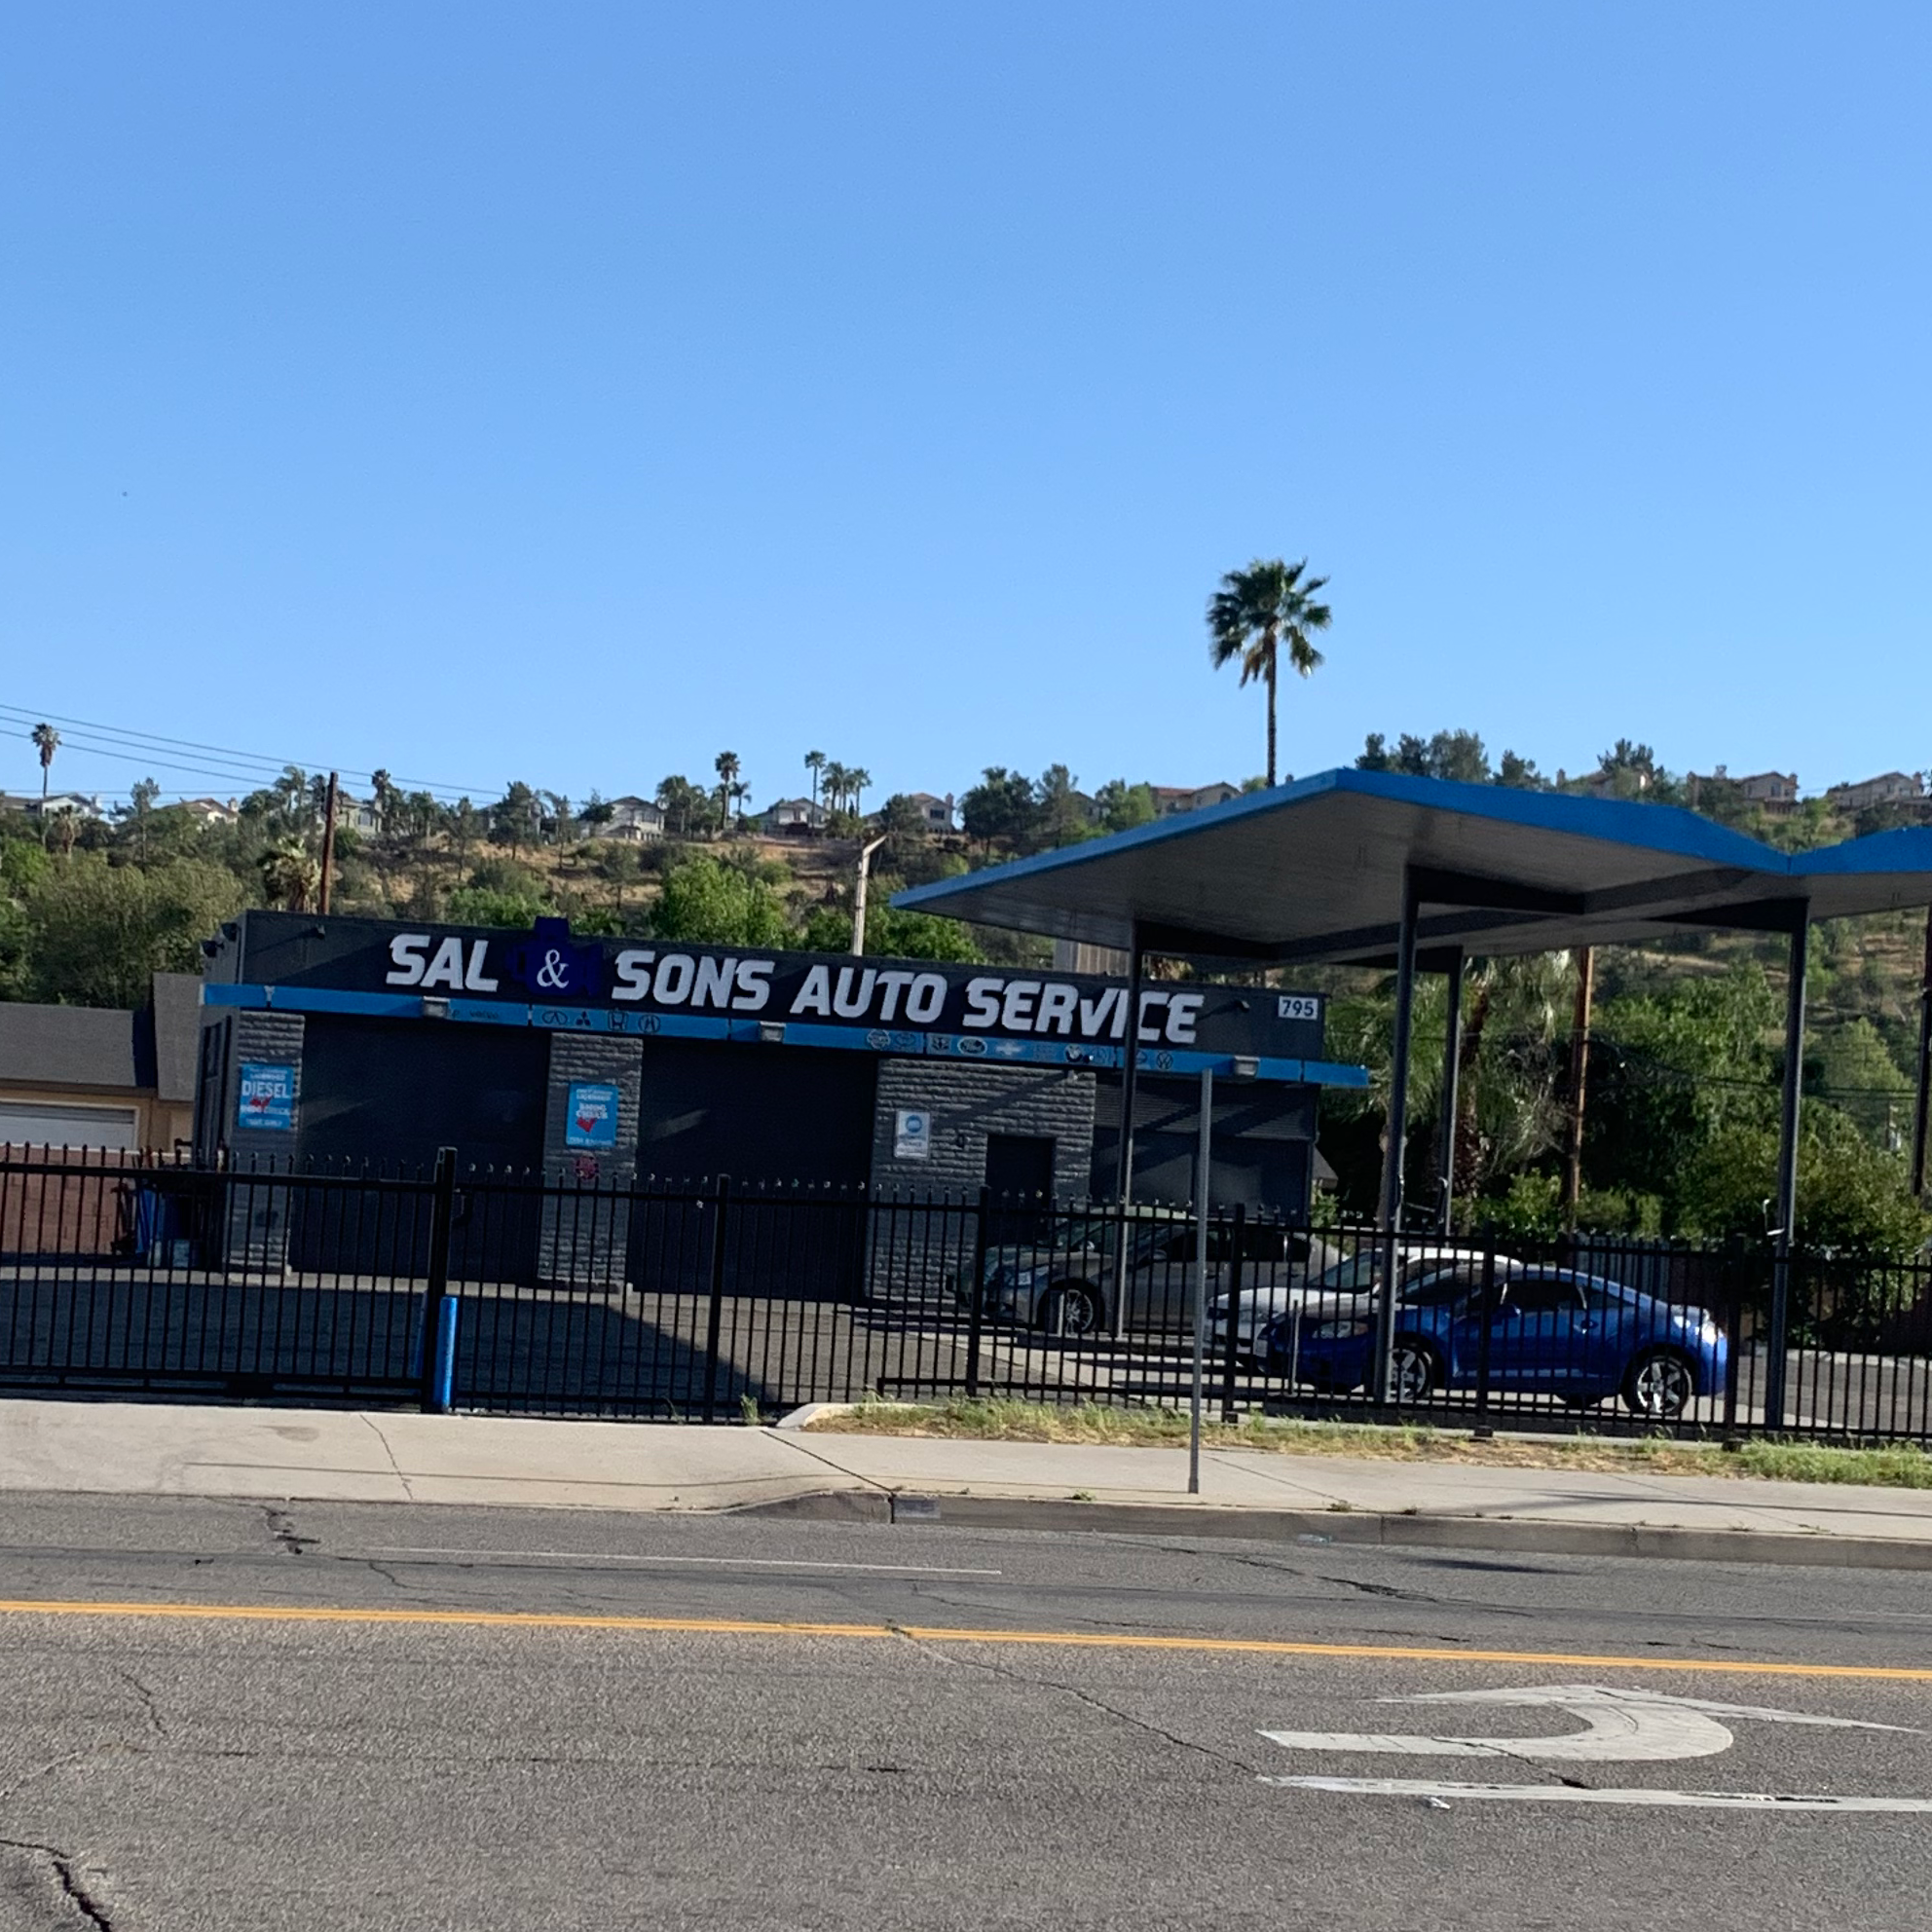 Sal & Sons Auto Service